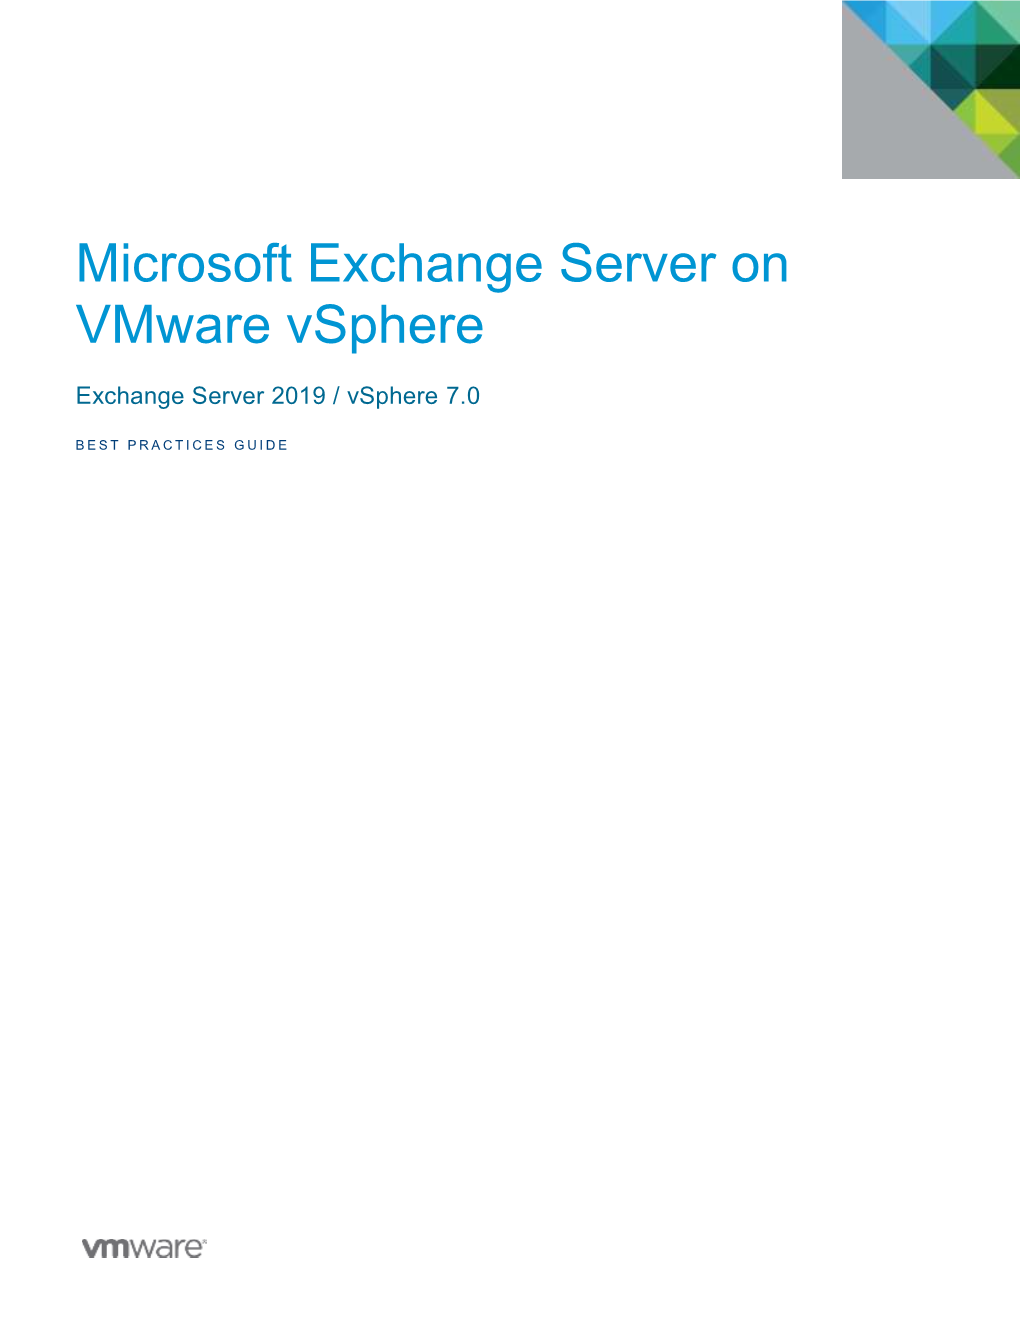 Microsoft Exchange Server 2019 on Vmware Best Practices